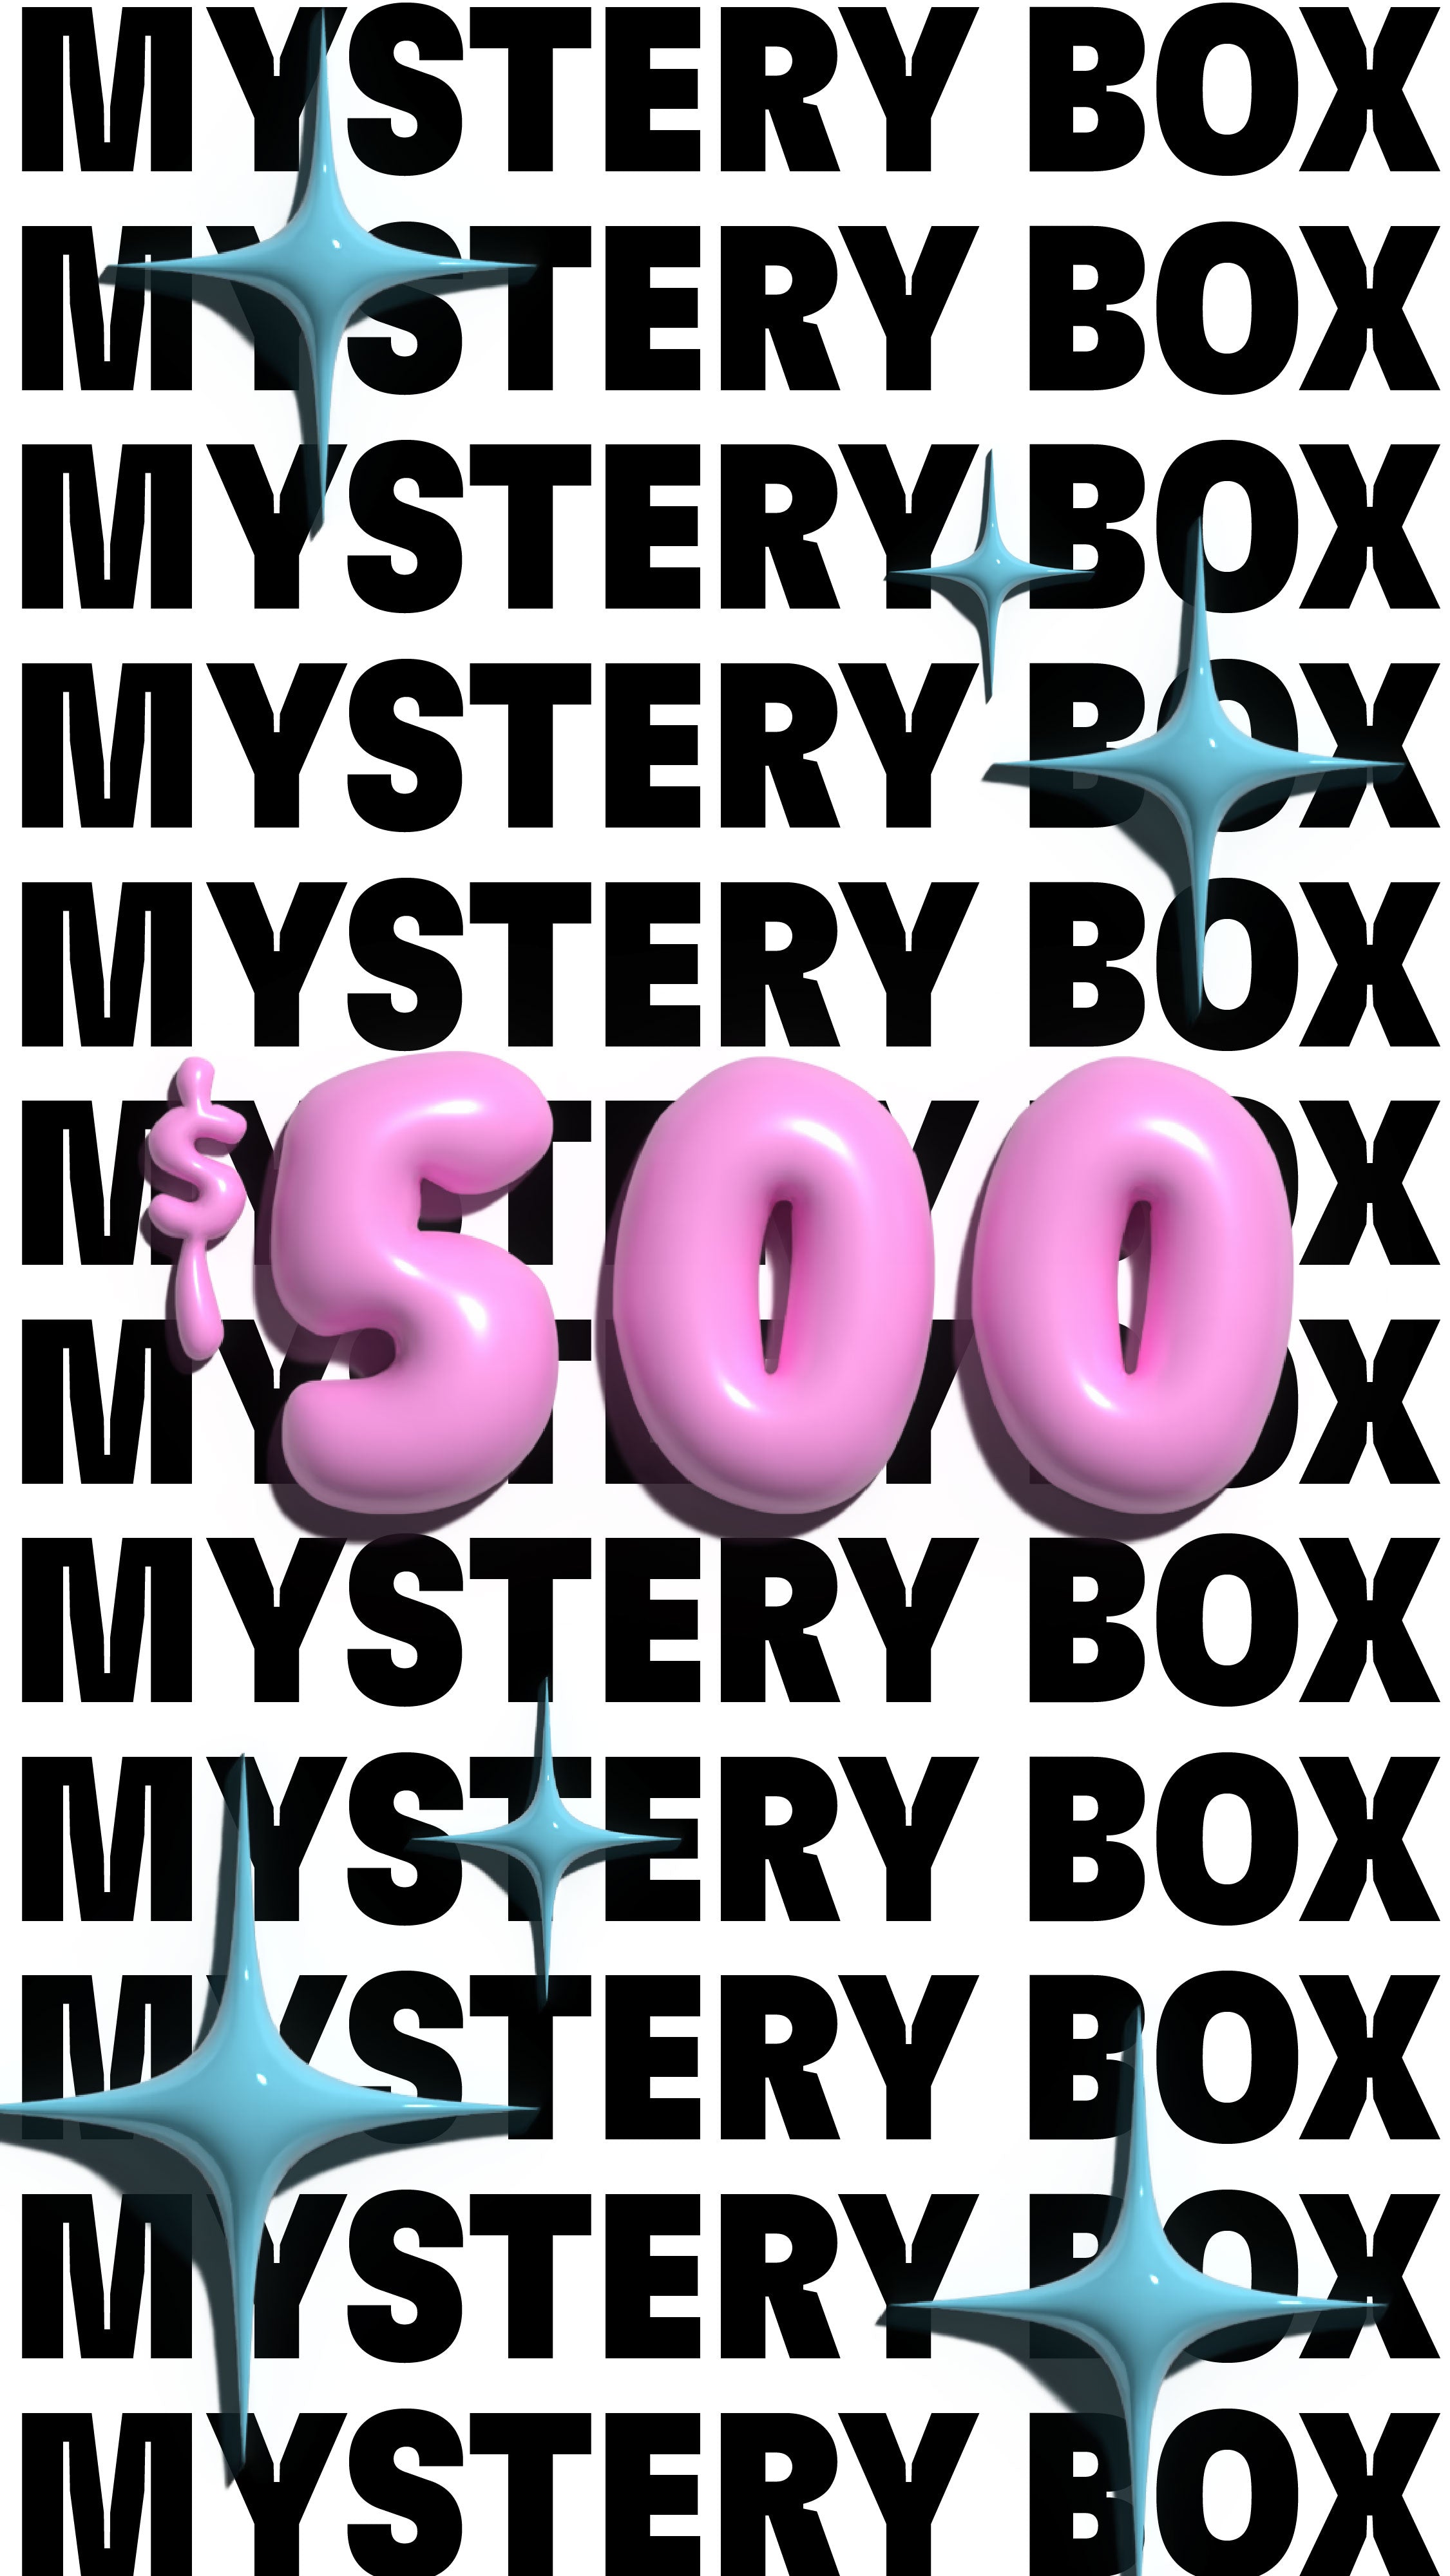 $500 Mystery Box (Apparel)